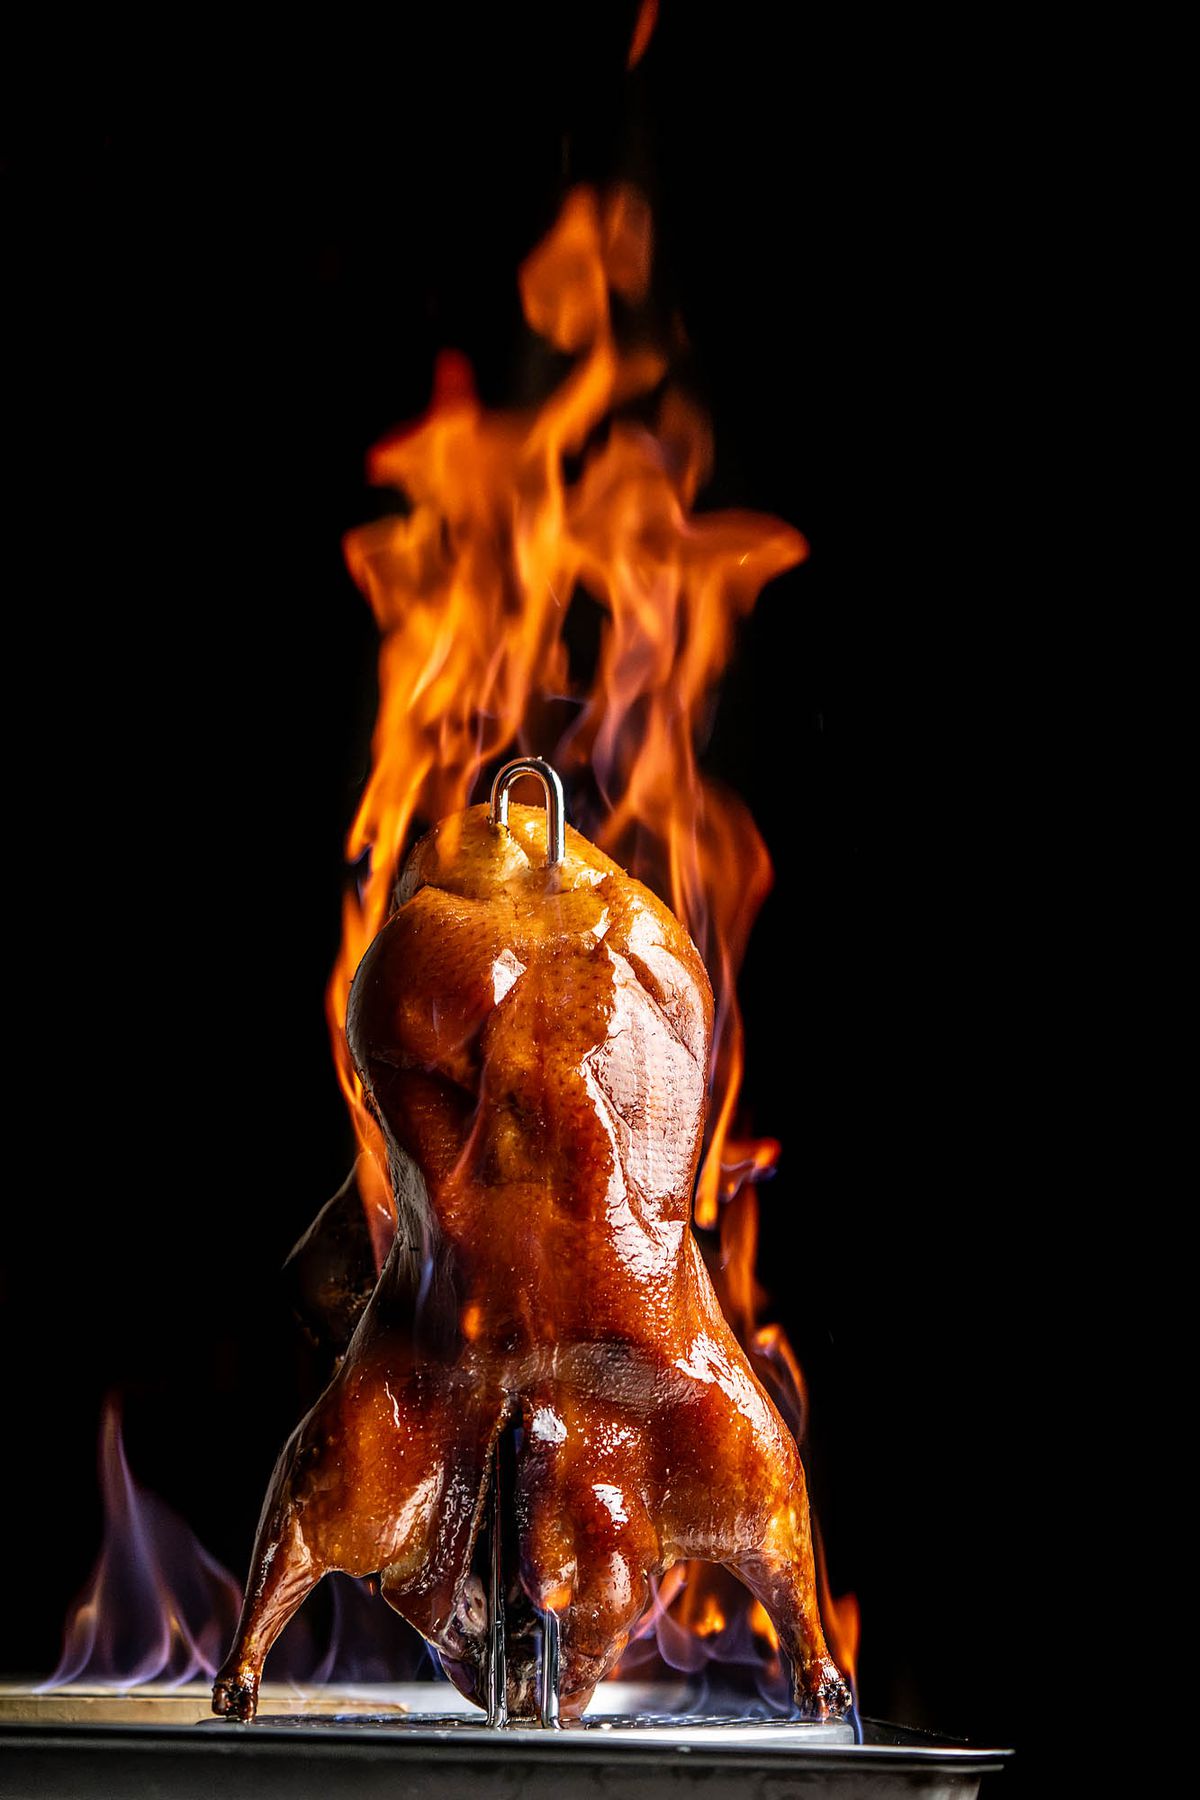 Baijiu-enflamed roast duck.